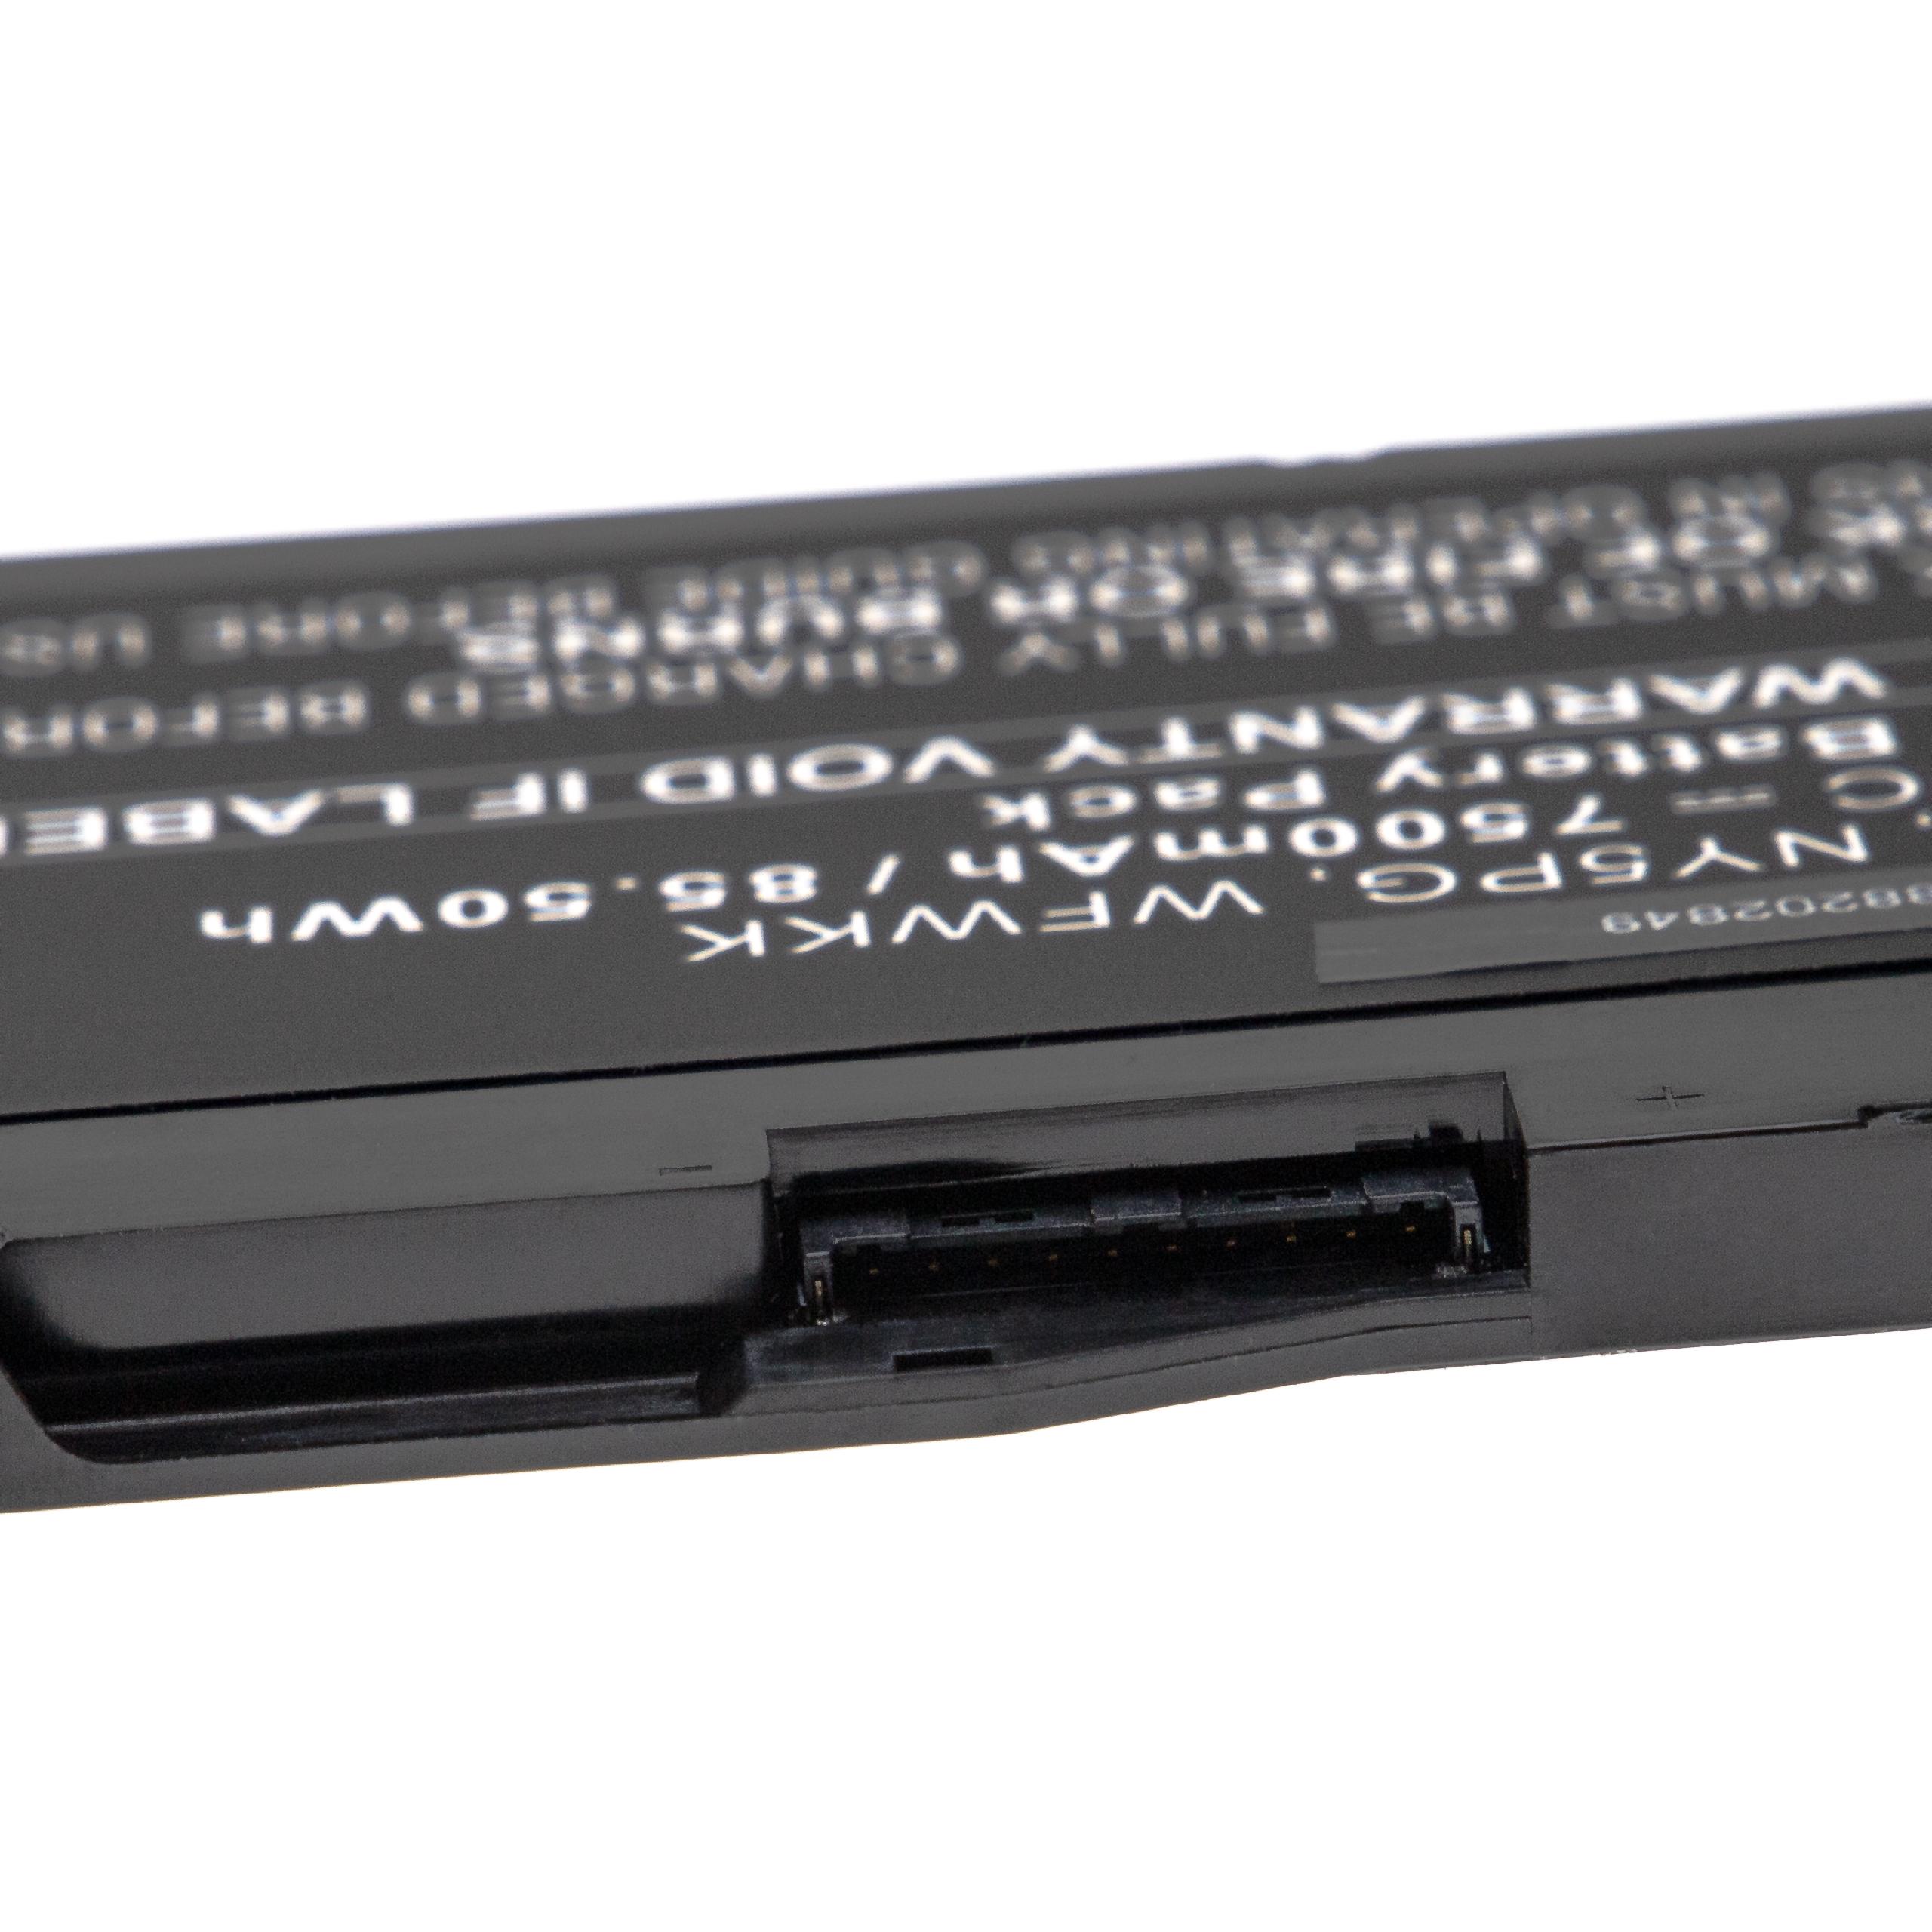 Batterie remplace Dell NY5PG, VG93N, WFWKK pour ordinateur portable - 7500mAh 11,4V Li-polymère